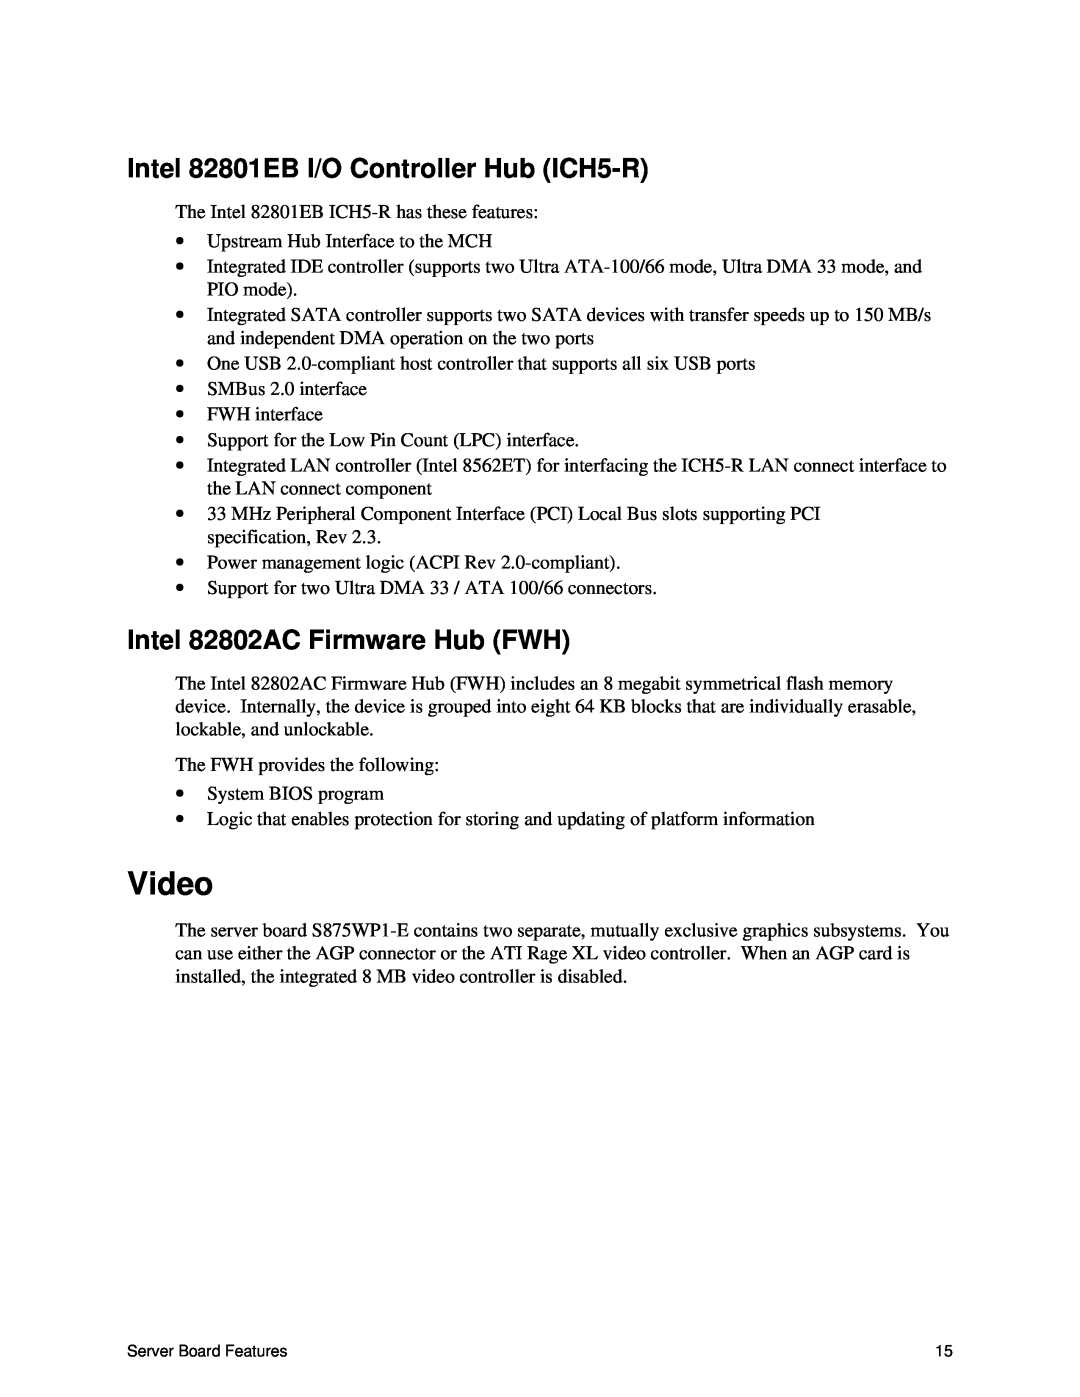 Intel S875WP1-E manual Video, Intel 82801EB I/O Controller Hub ICH5-R, Intel 82802AC Firmware Hub FWH 